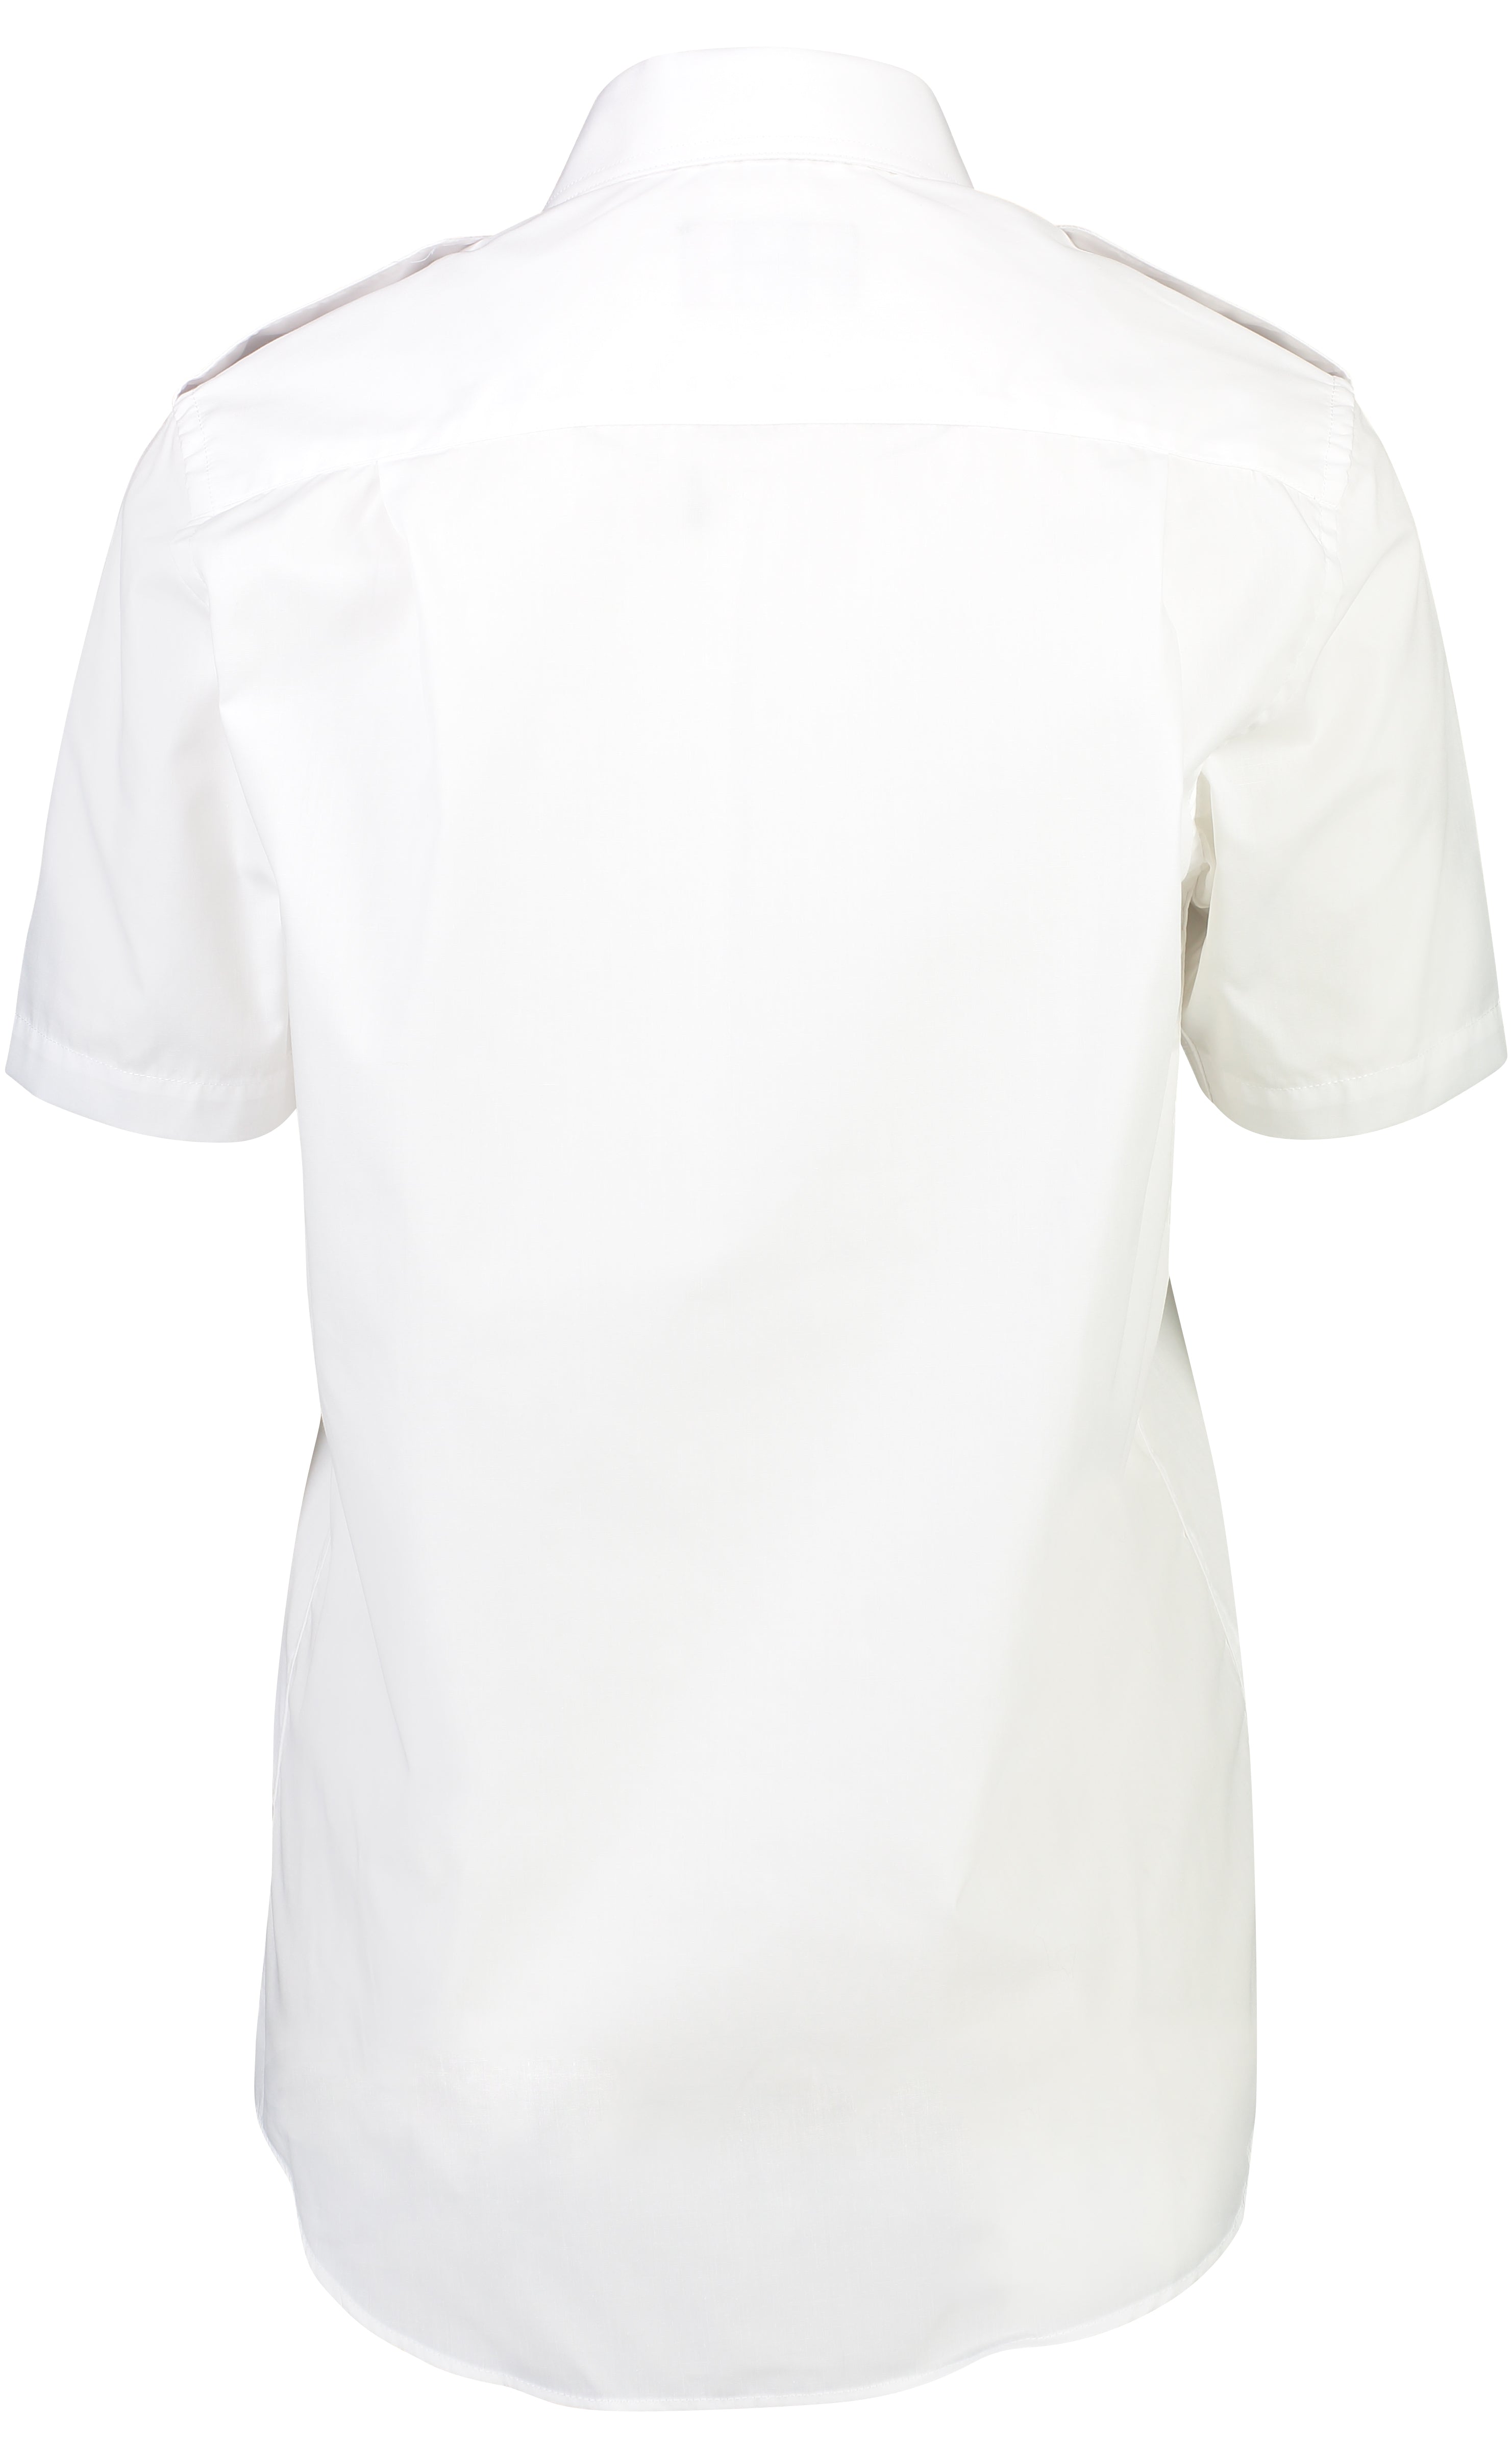 Mens Short Sleeve Pilot Dress Shirt White-Corinthian-Downunder Pilot Shop Australia